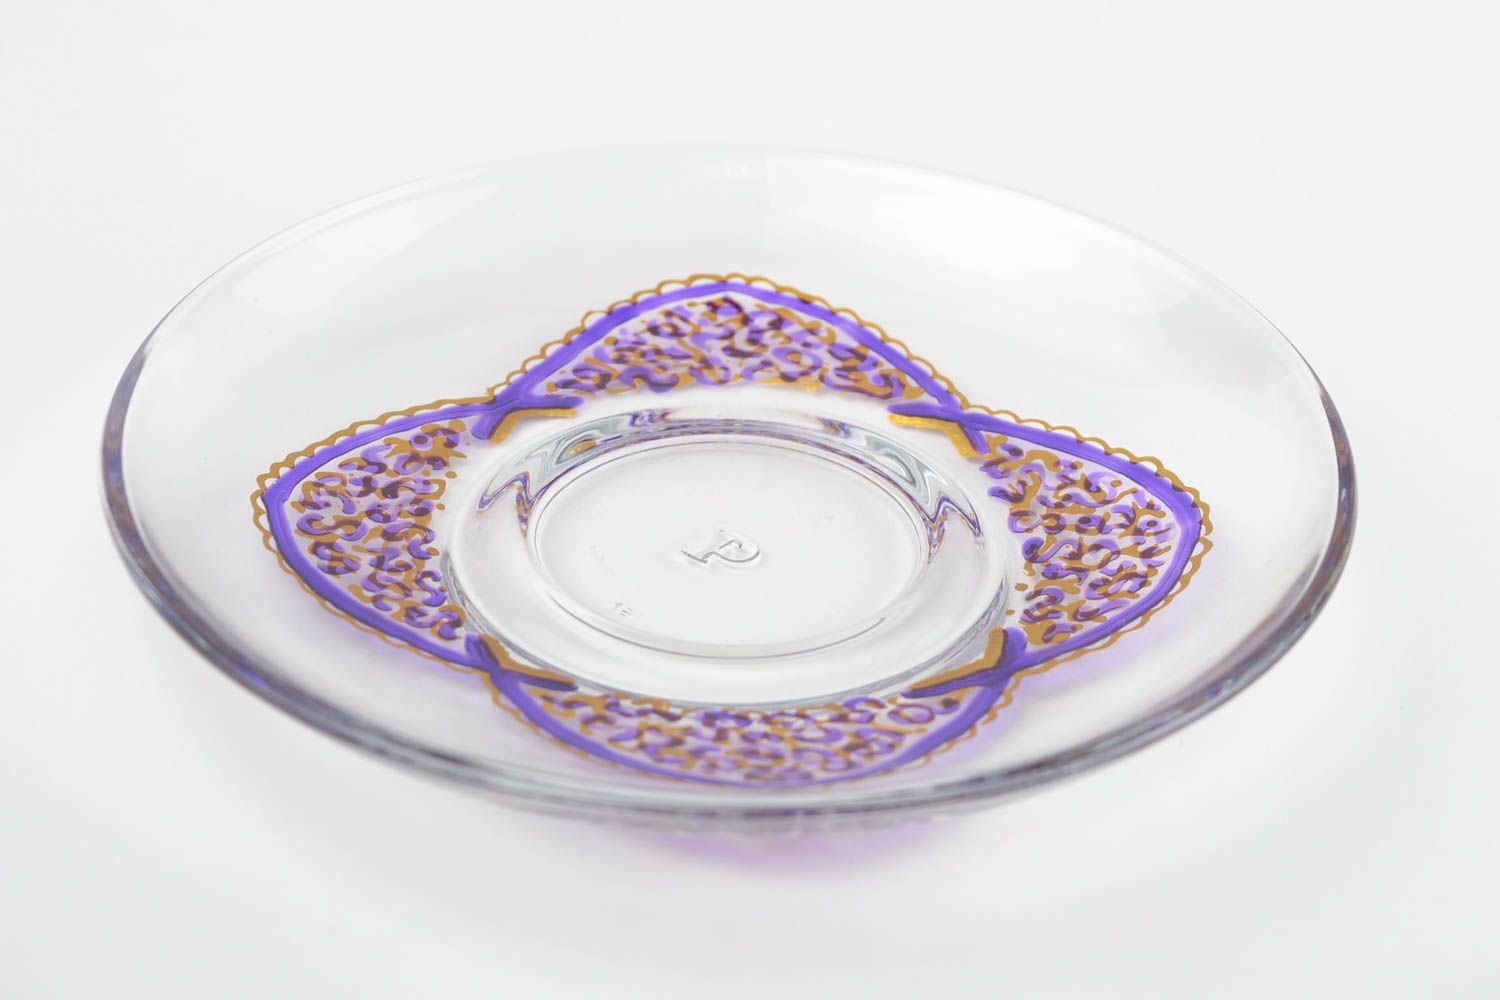 Handmade saucer stained glass saucer glass tableware interior decor ideas photo 3